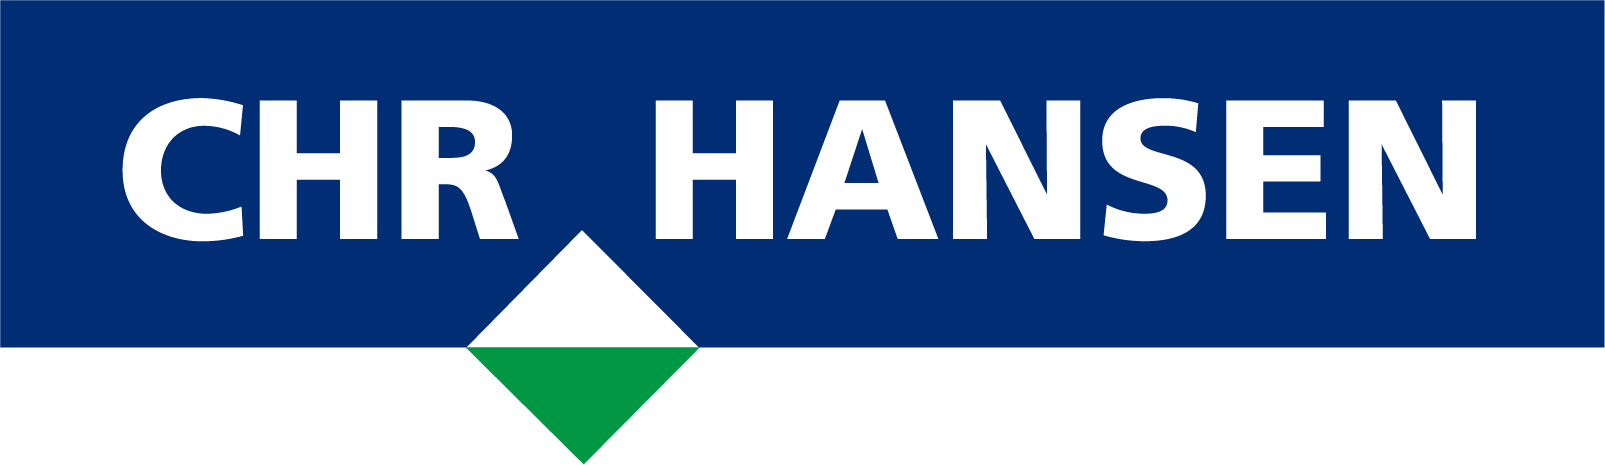 Chr. Hansen Logo png